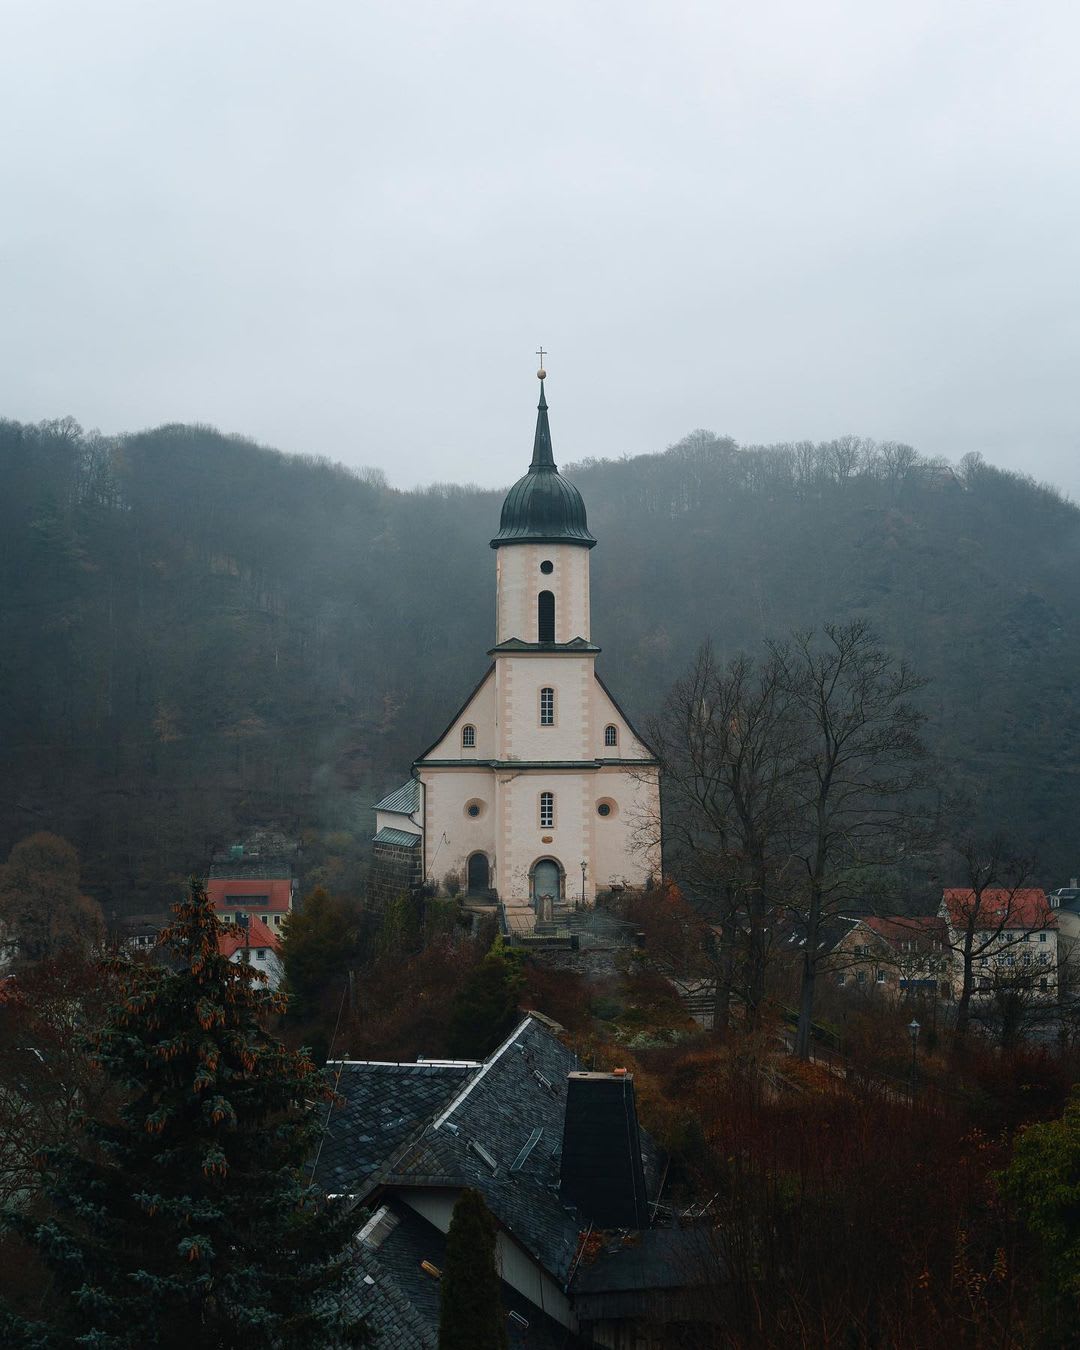 Little church around the rocks in Sachsen, Germany